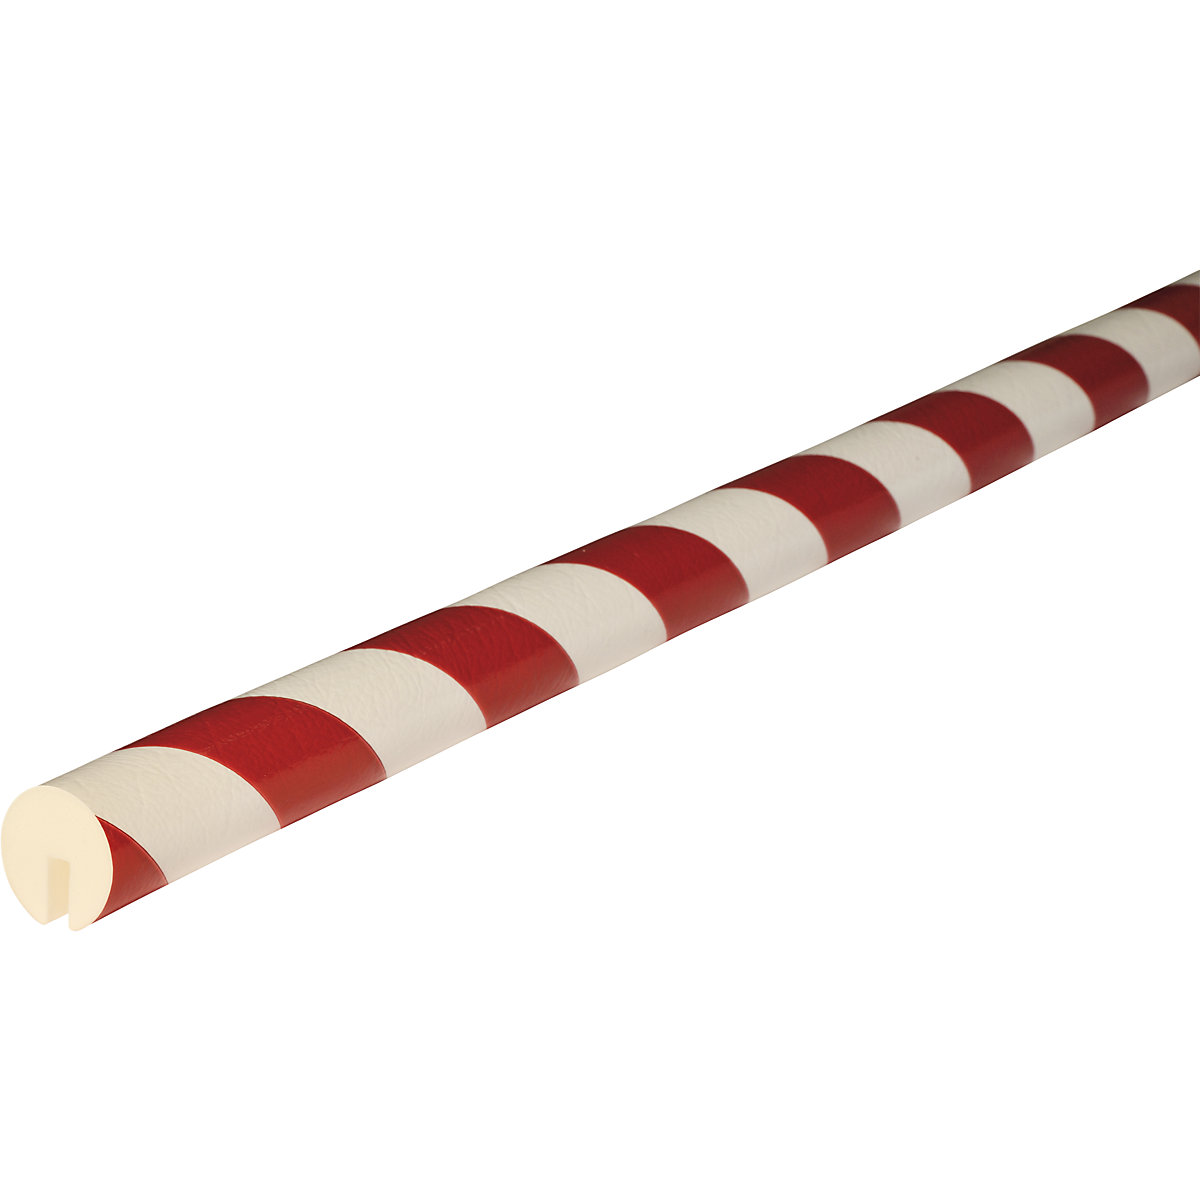 Knuffi® edge protection – SHG, type B, 1 m piece, red / white-22